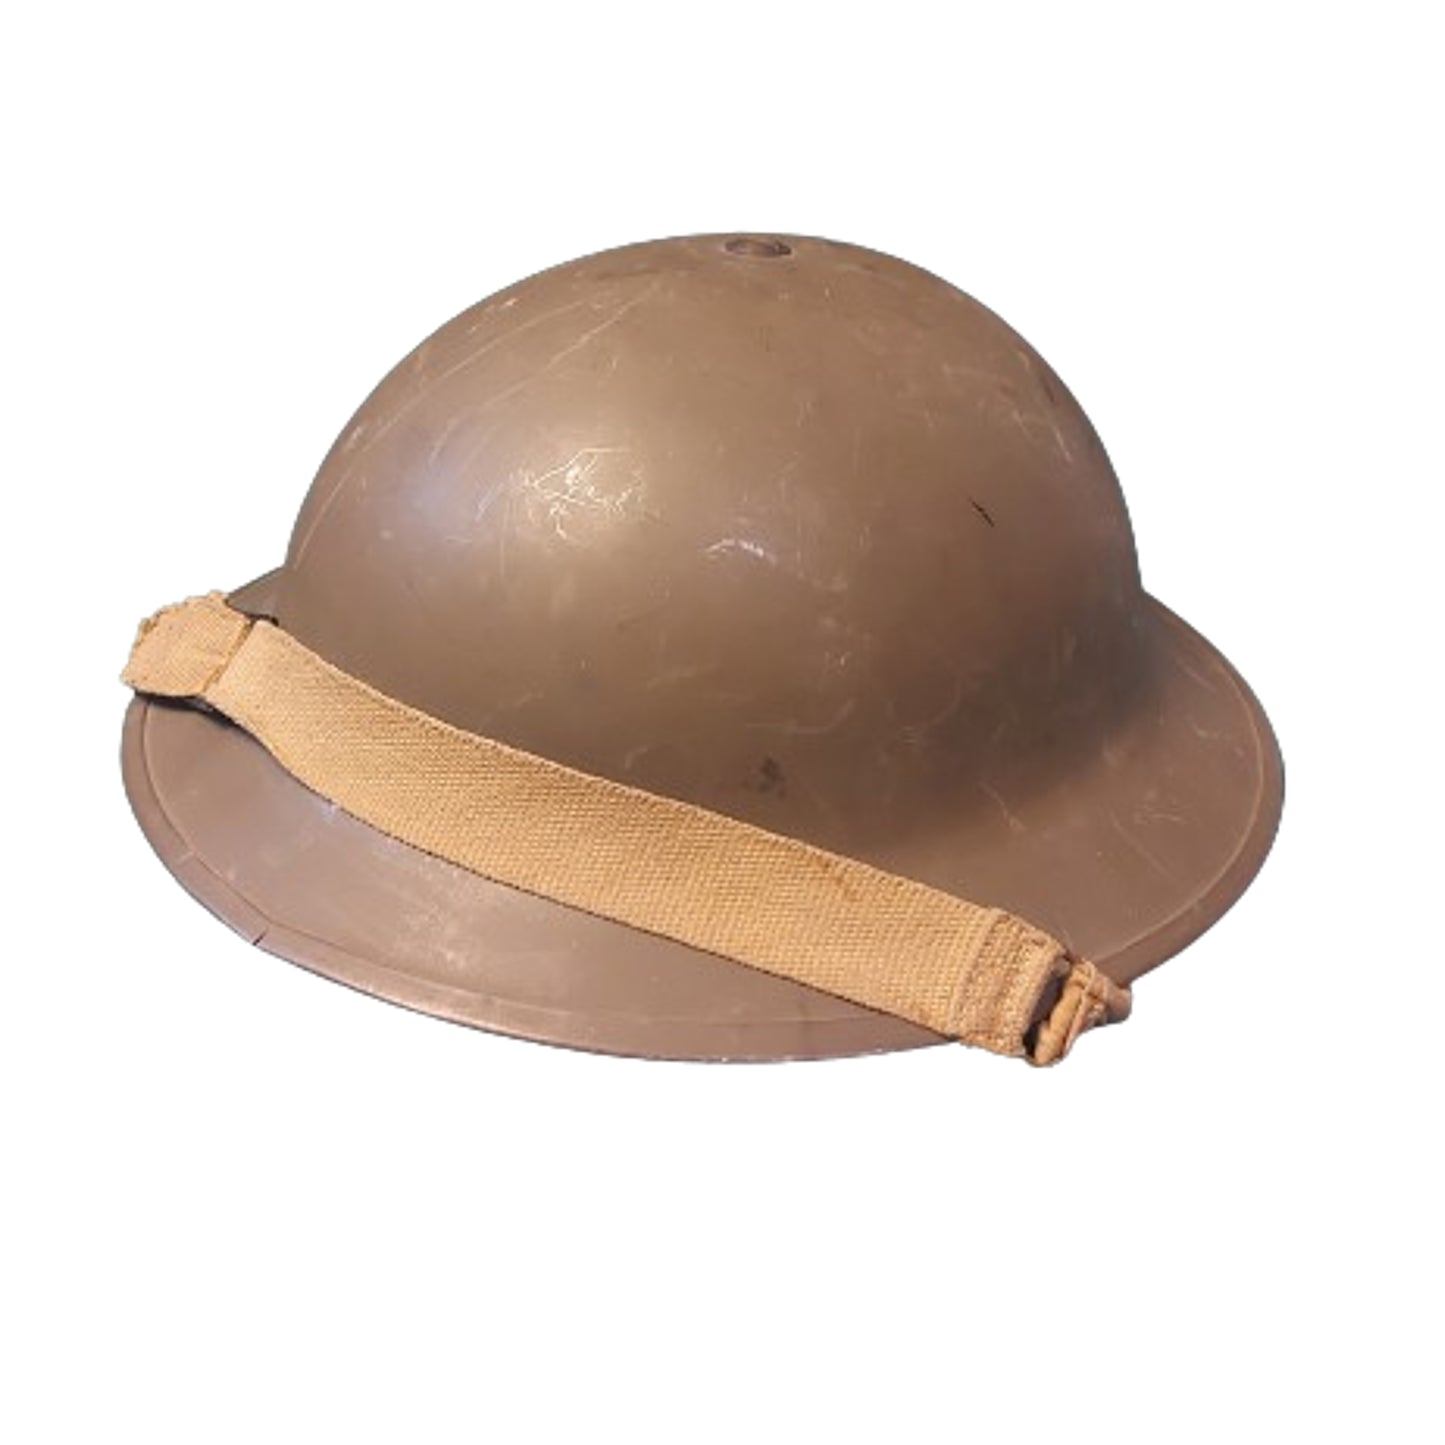 WW2 Canadian Air Raid Precaution Helmet 1942